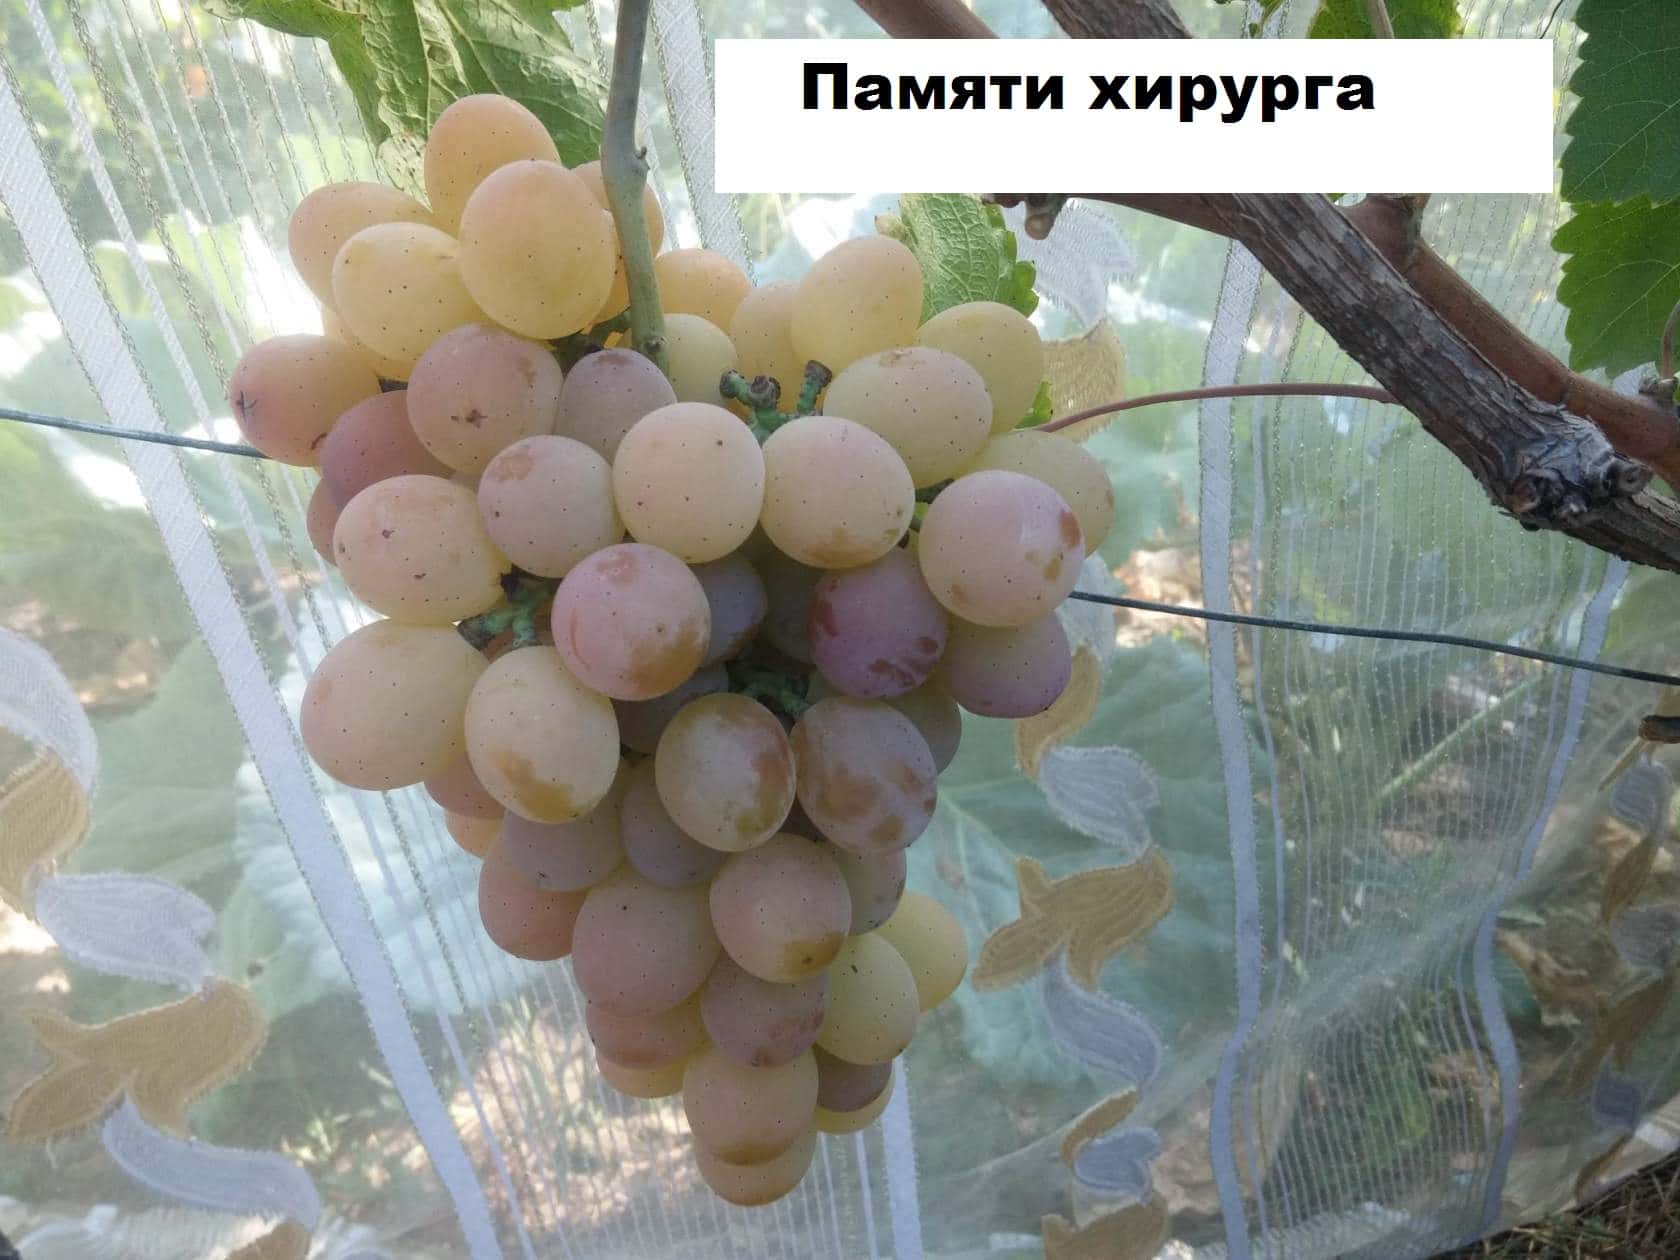 сорт винограда Памяти хирурга